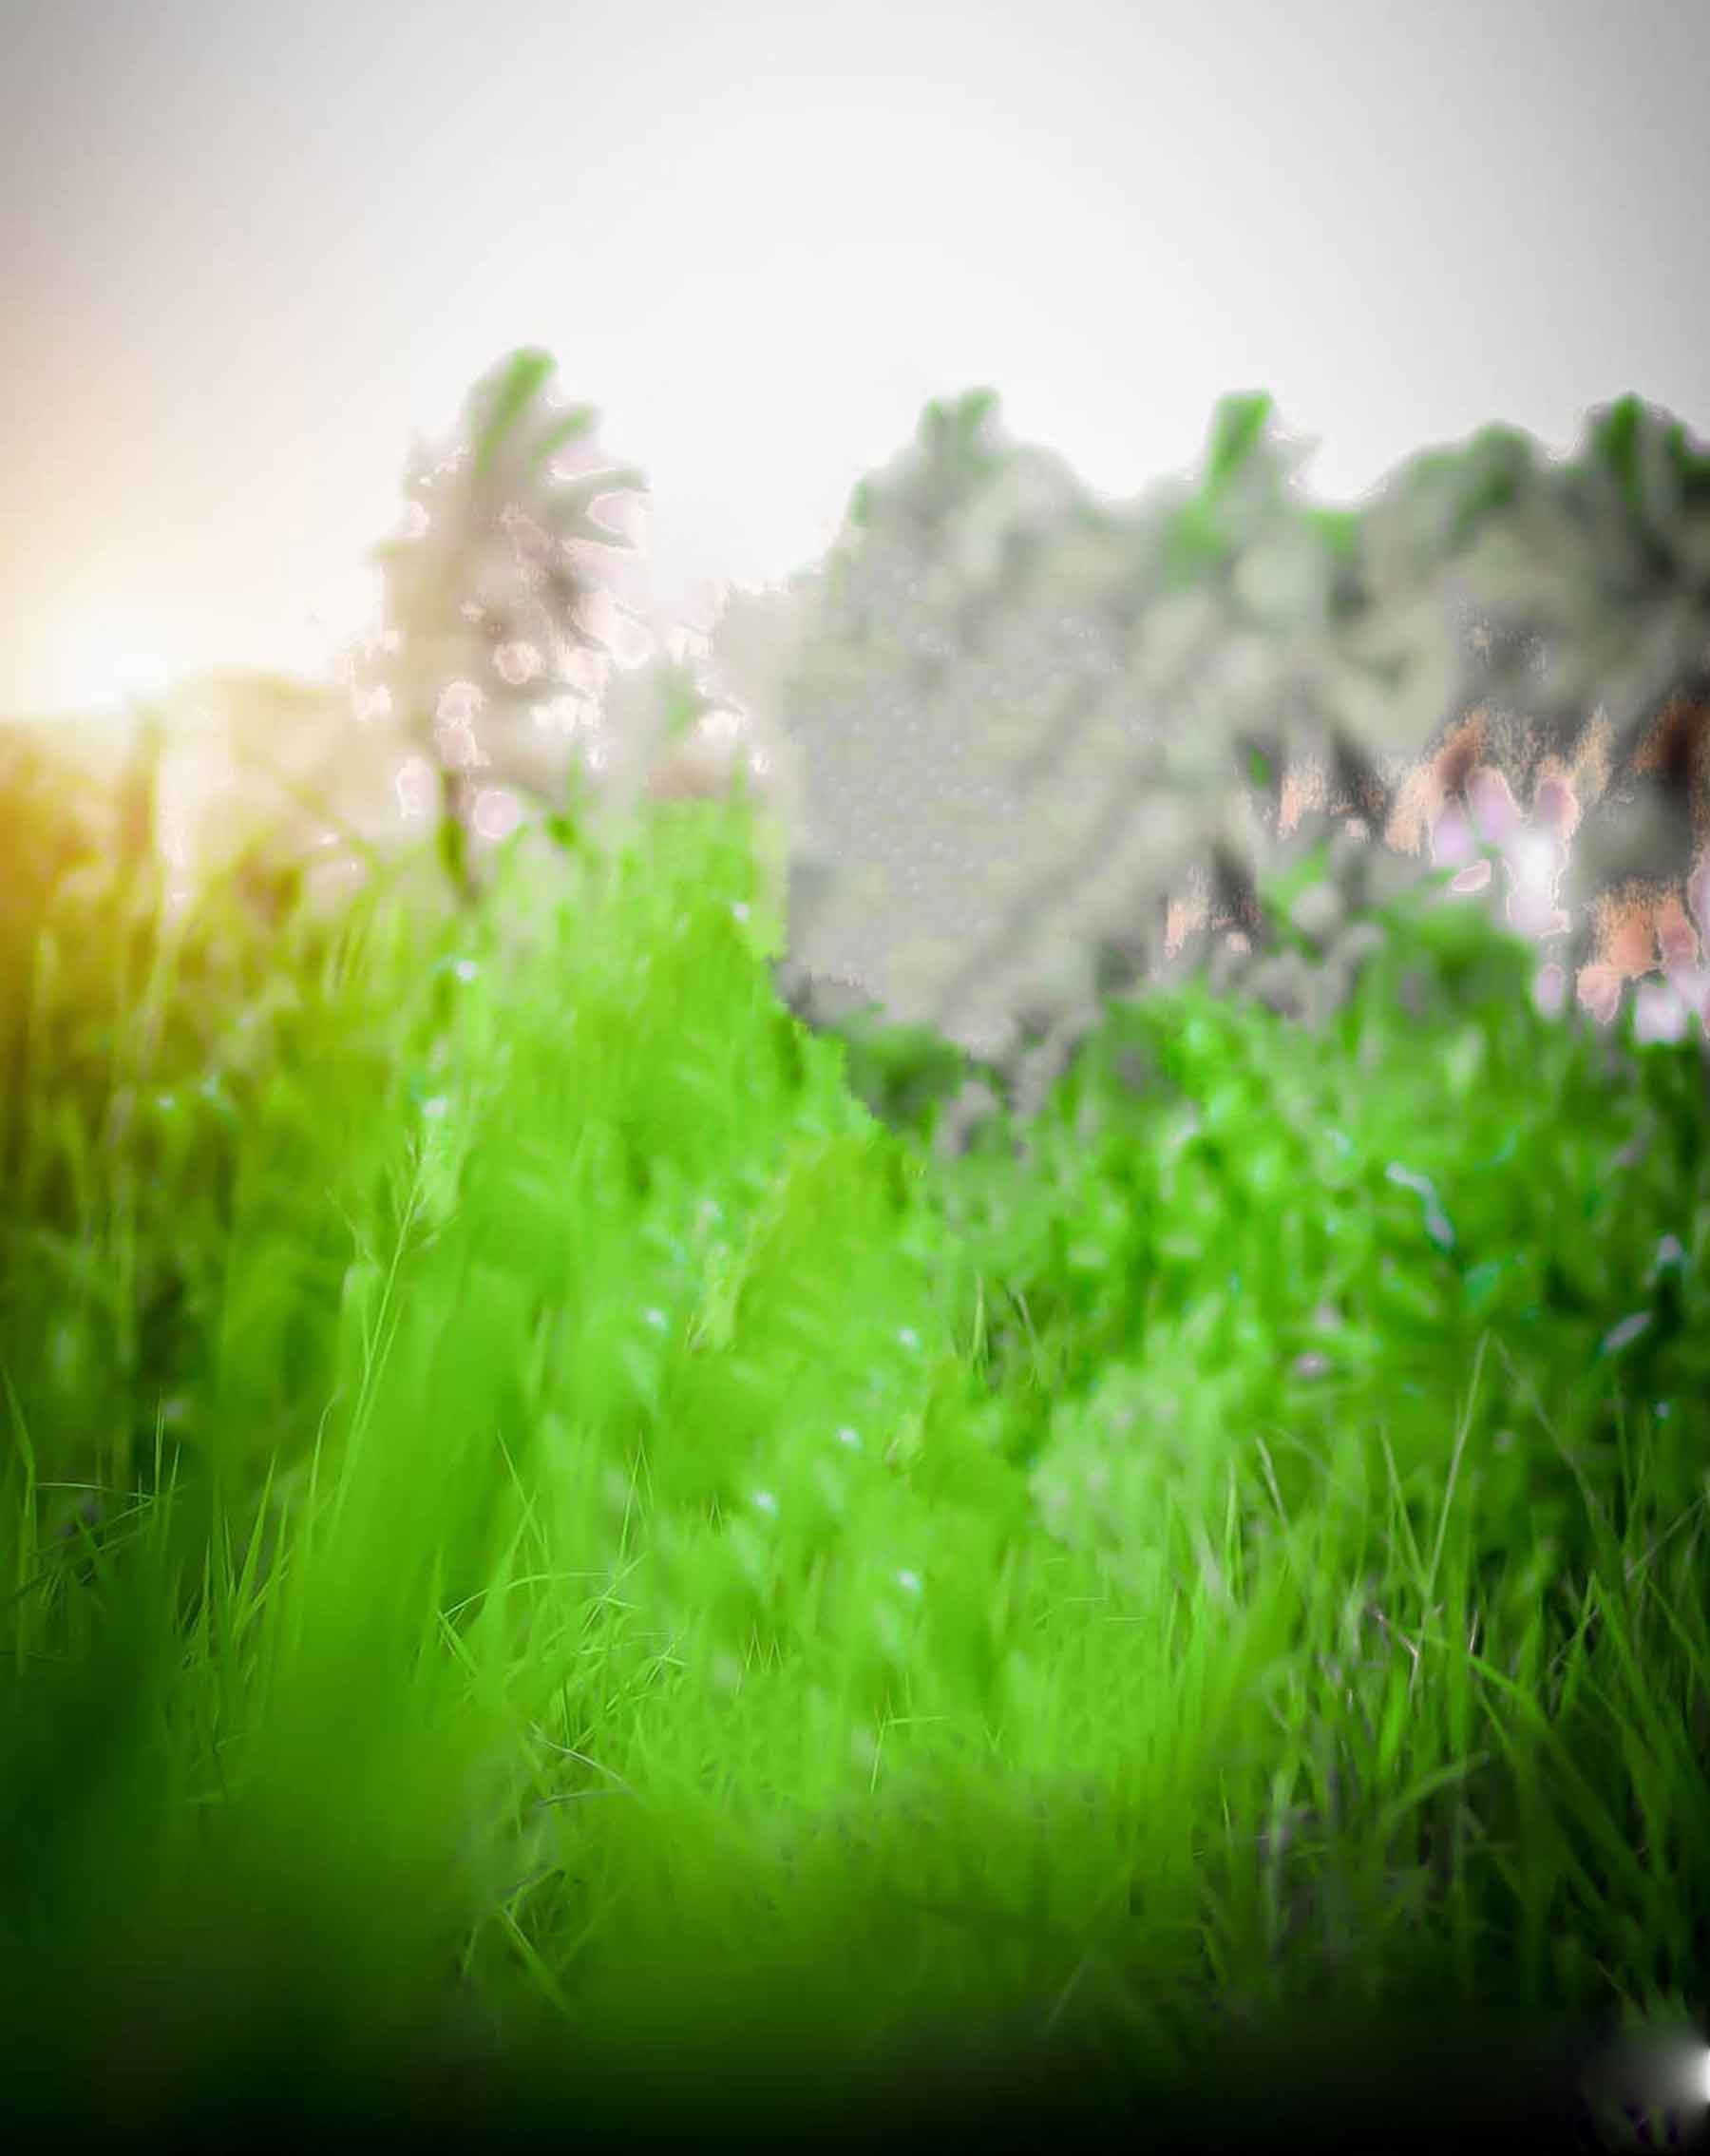 Best Green Blur CB Background Free Stock [ Download ]